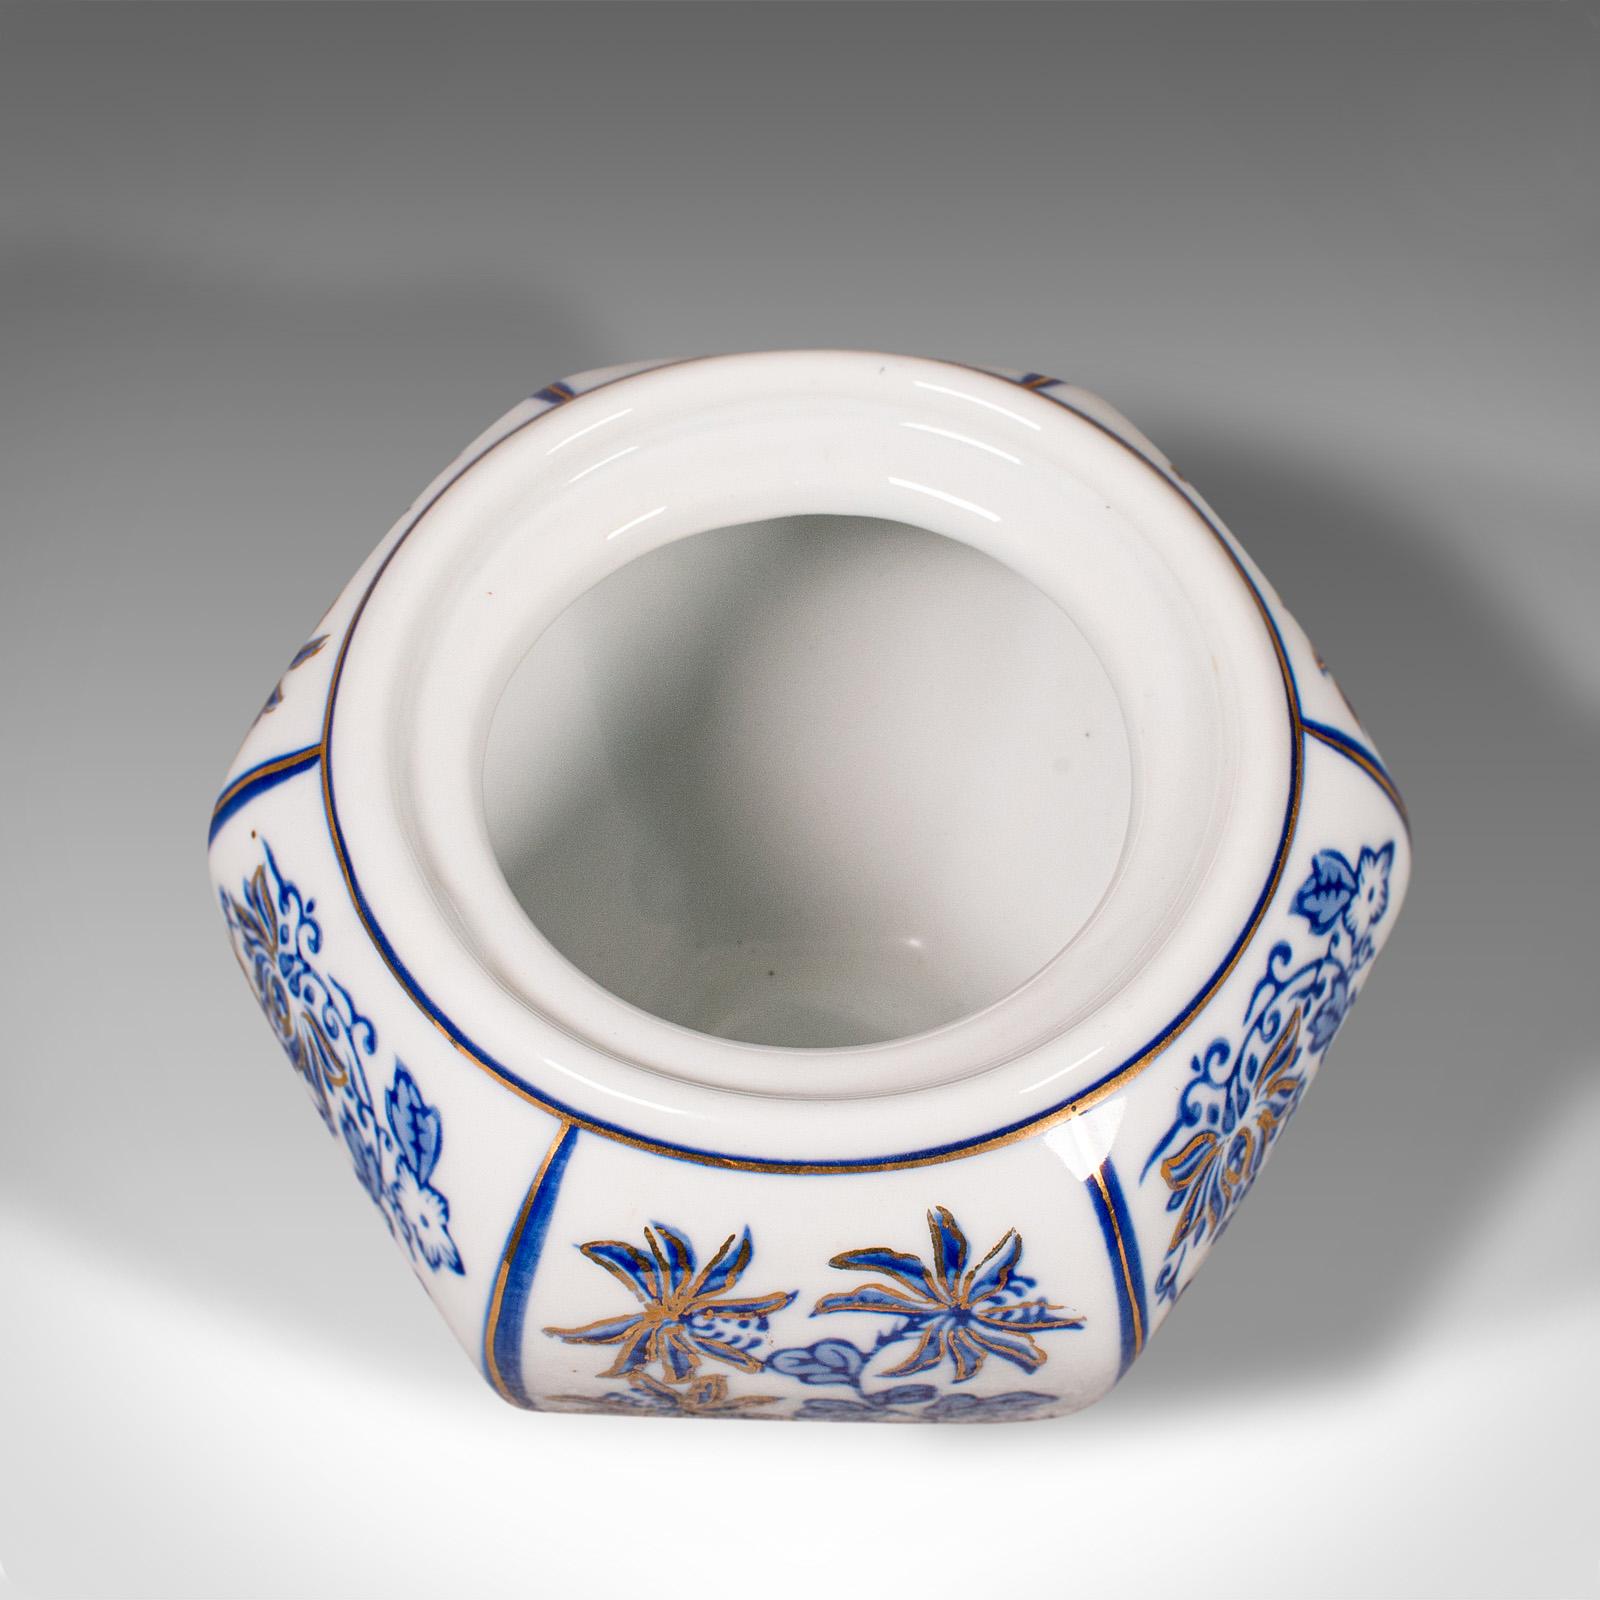 Vintage Blue and White Spice Jar, Chinese, Ceramic, Decorative Pot, Art Deco For Sale 3